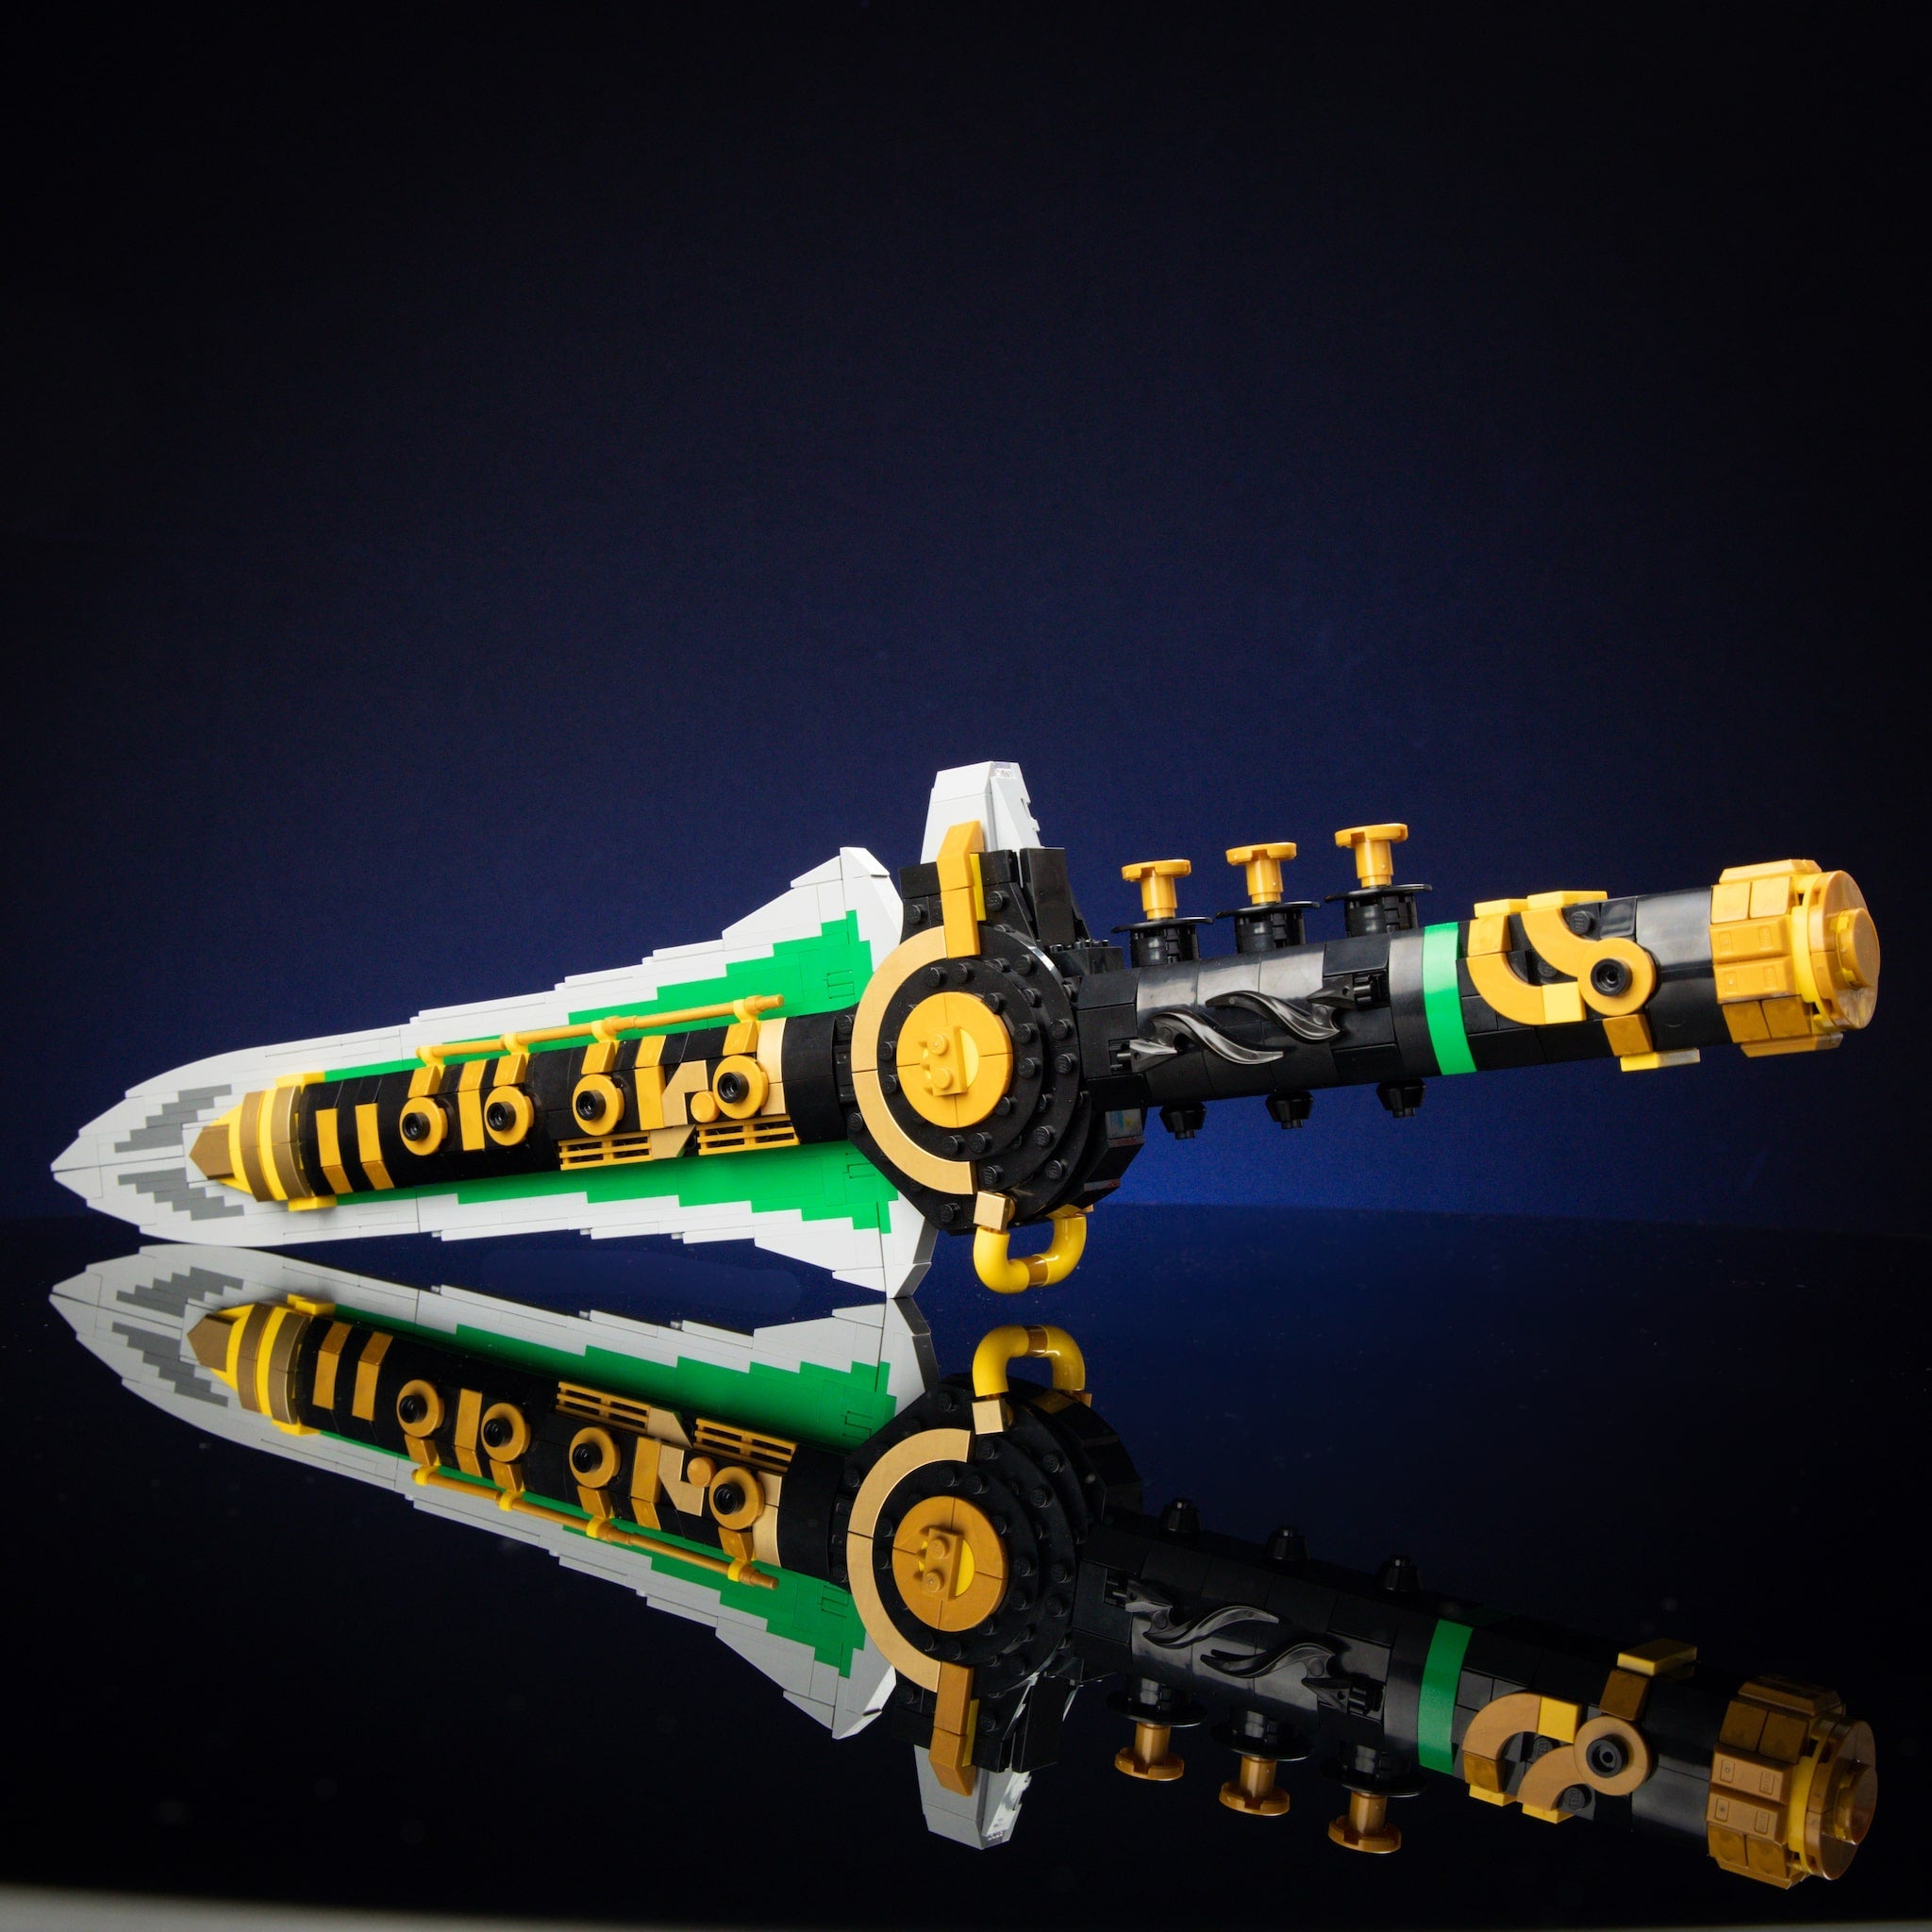 Dragon Dagger Life-Sized Replica made using LEGO parts - BrickerBuilds